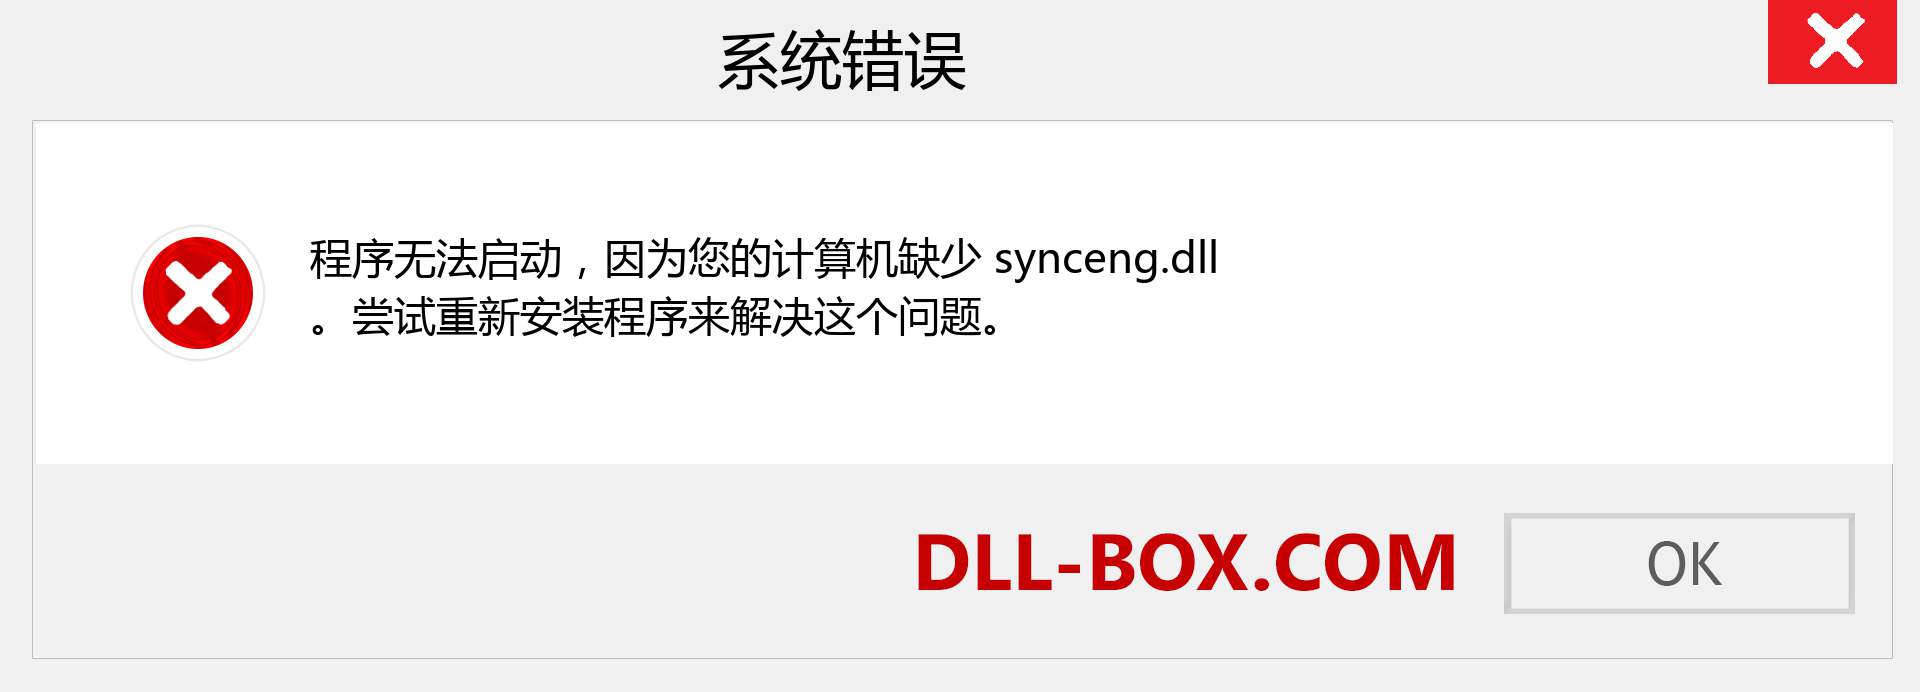 synceng.dll 文件丢失？。 适用于 Windows 7、8、10 的下载 - 修复 Windows、照片、图像上的 synceng dll 丢失错误